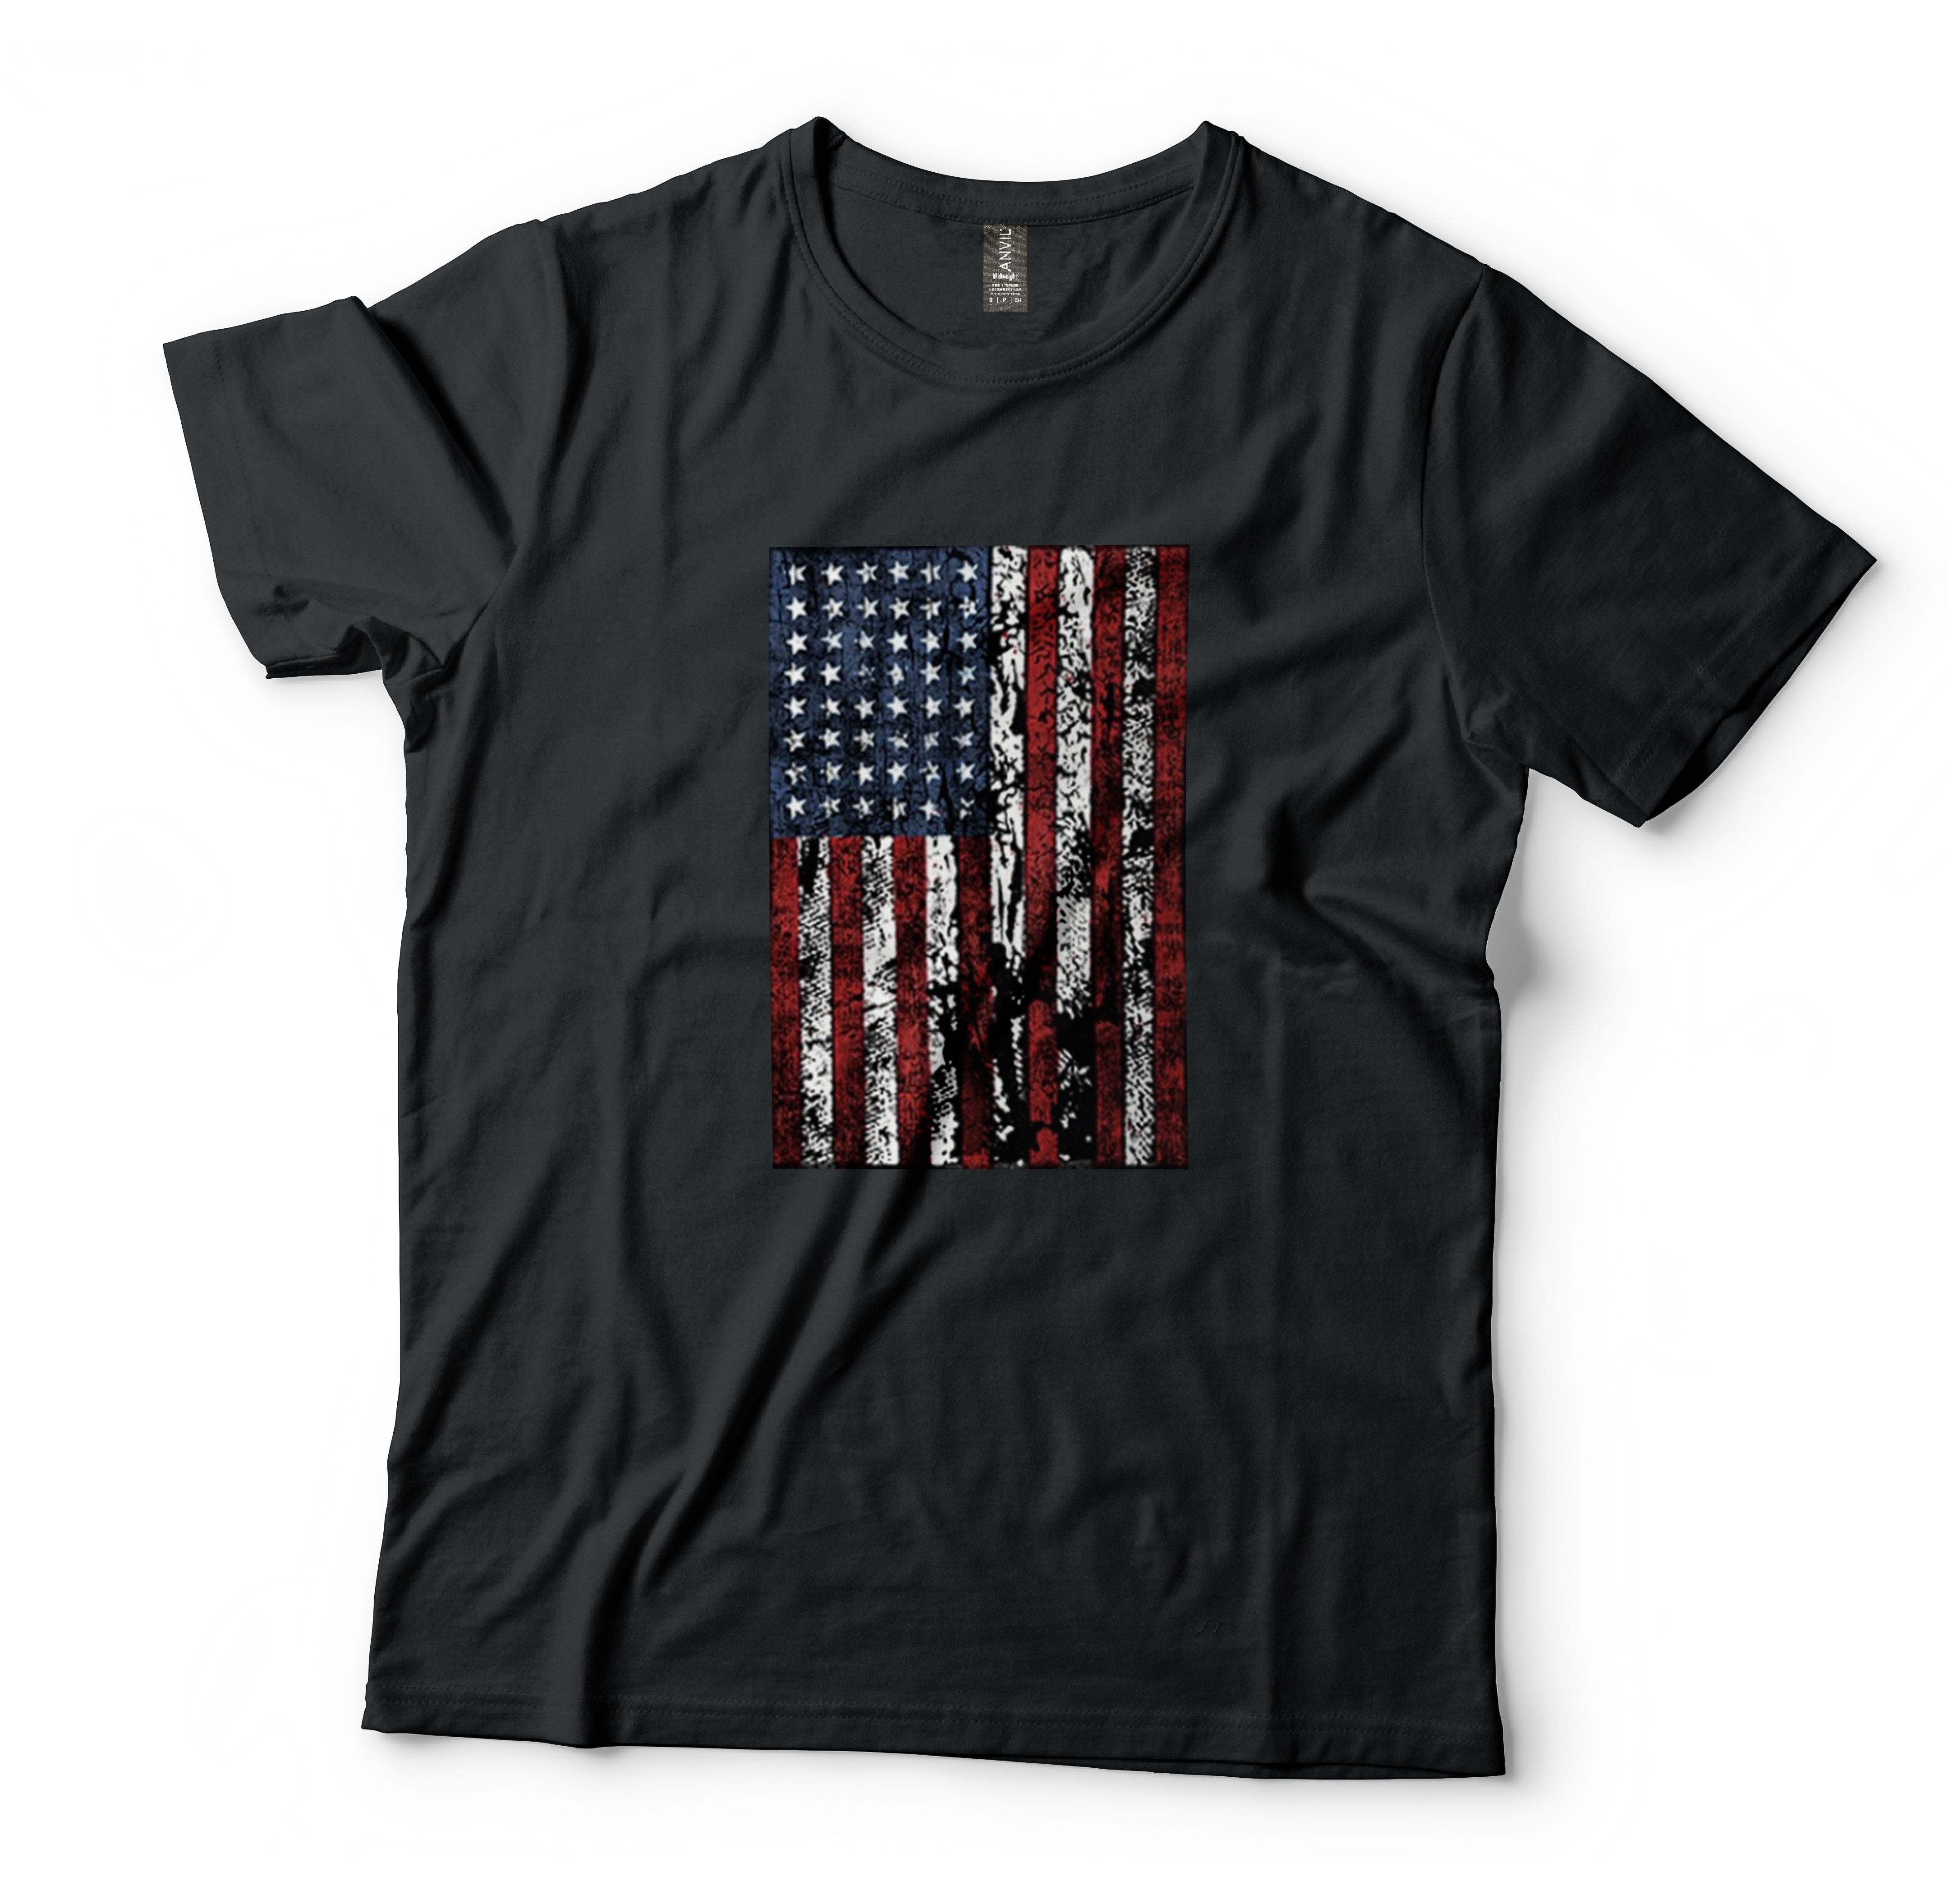 Distressed American Flag T-Shirt